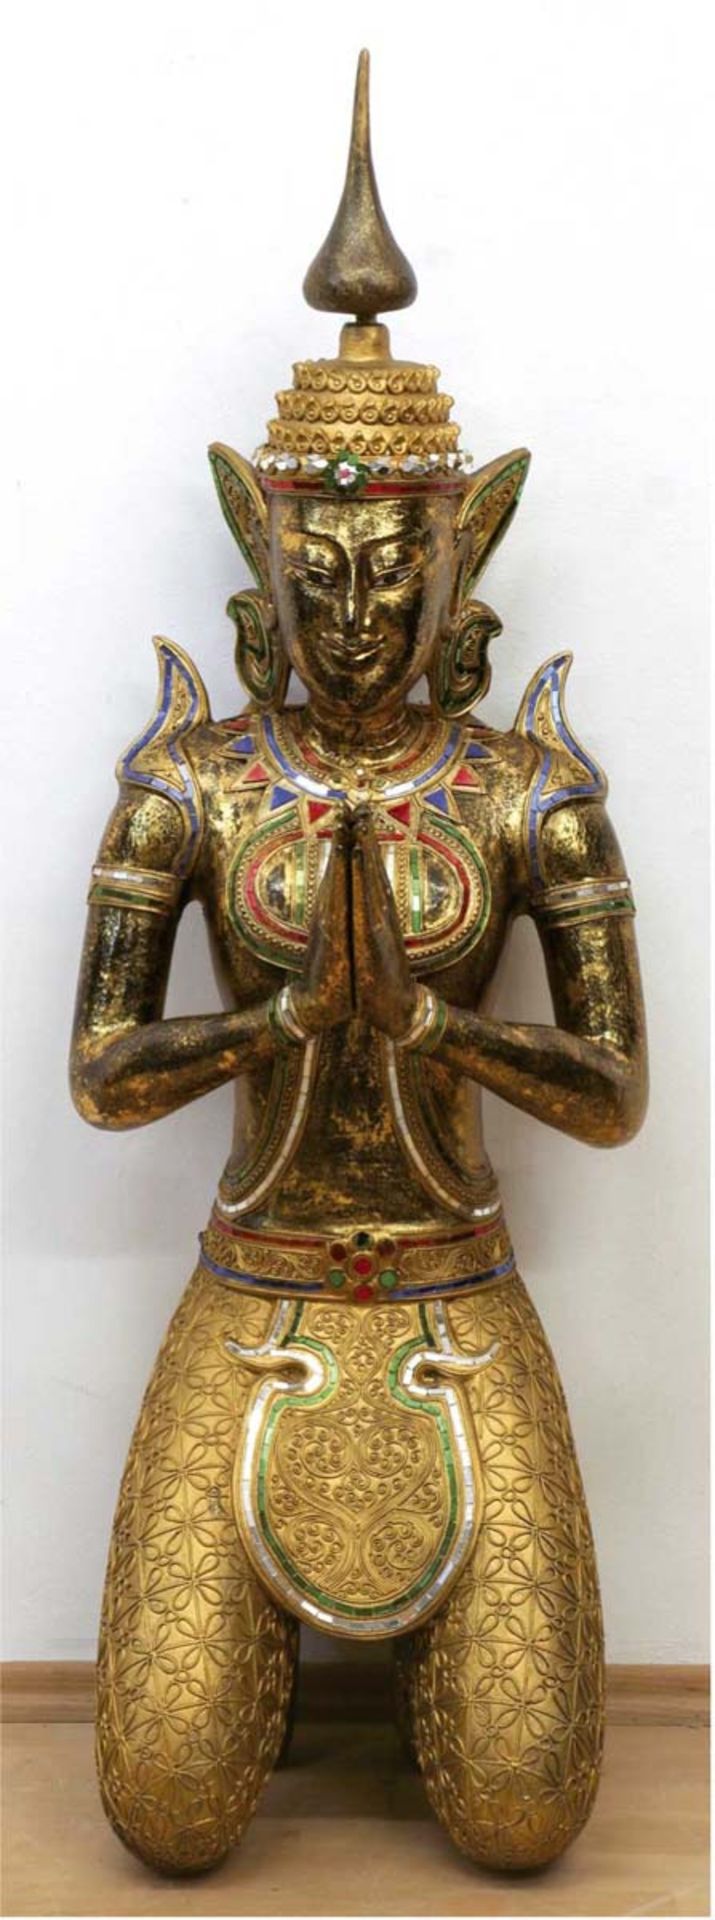 Große Figur "Kniender Buddha", Holz goldfarben gefaßt, belegt mit buntem Glas, H. 63 cm